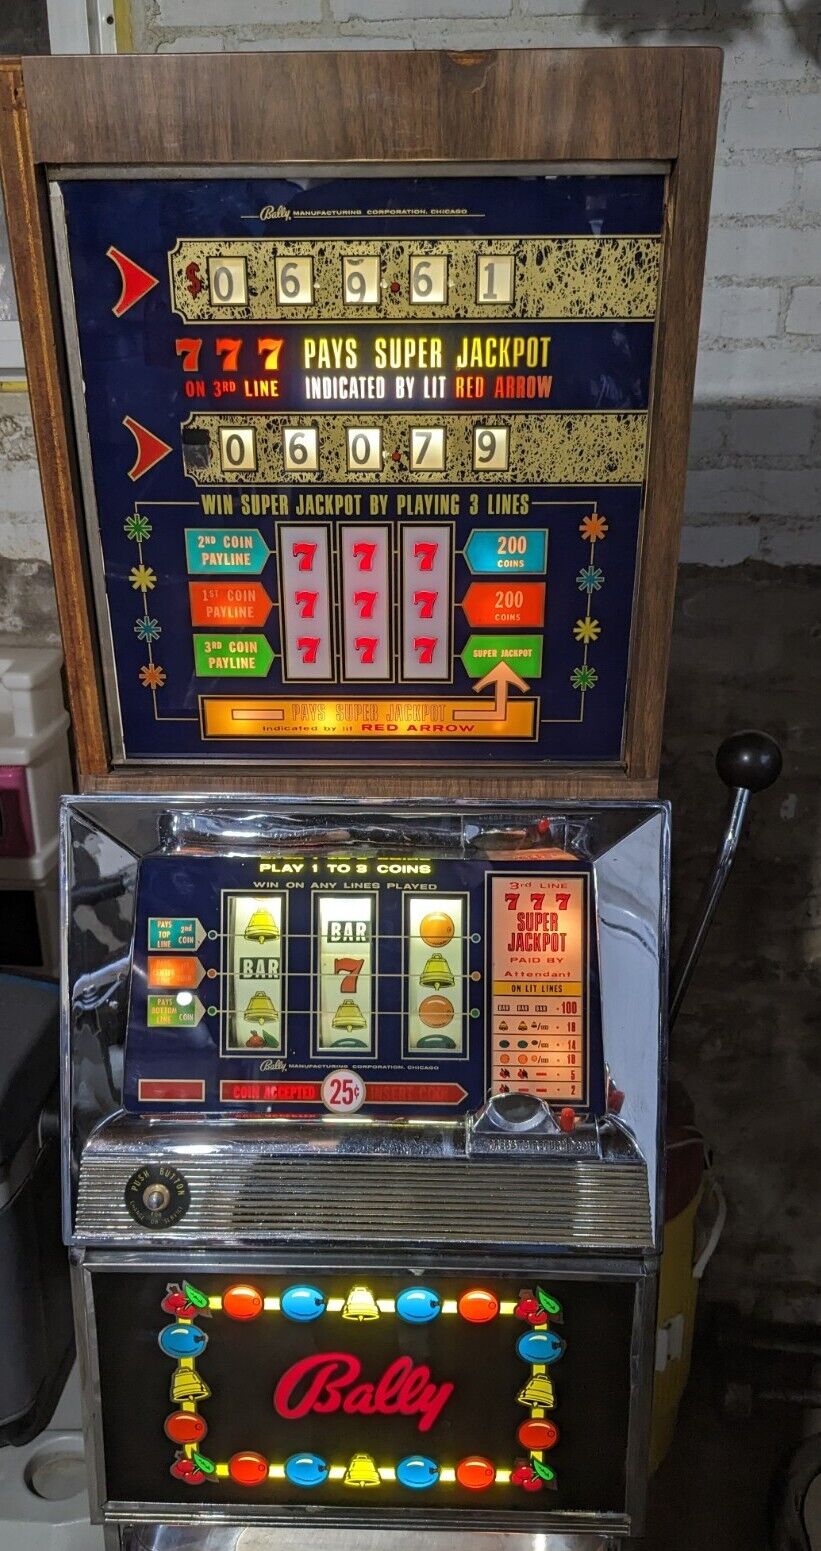 Vintage Bally Slot Machine - In good Condition - 25 cent -  777 Super Jackpot